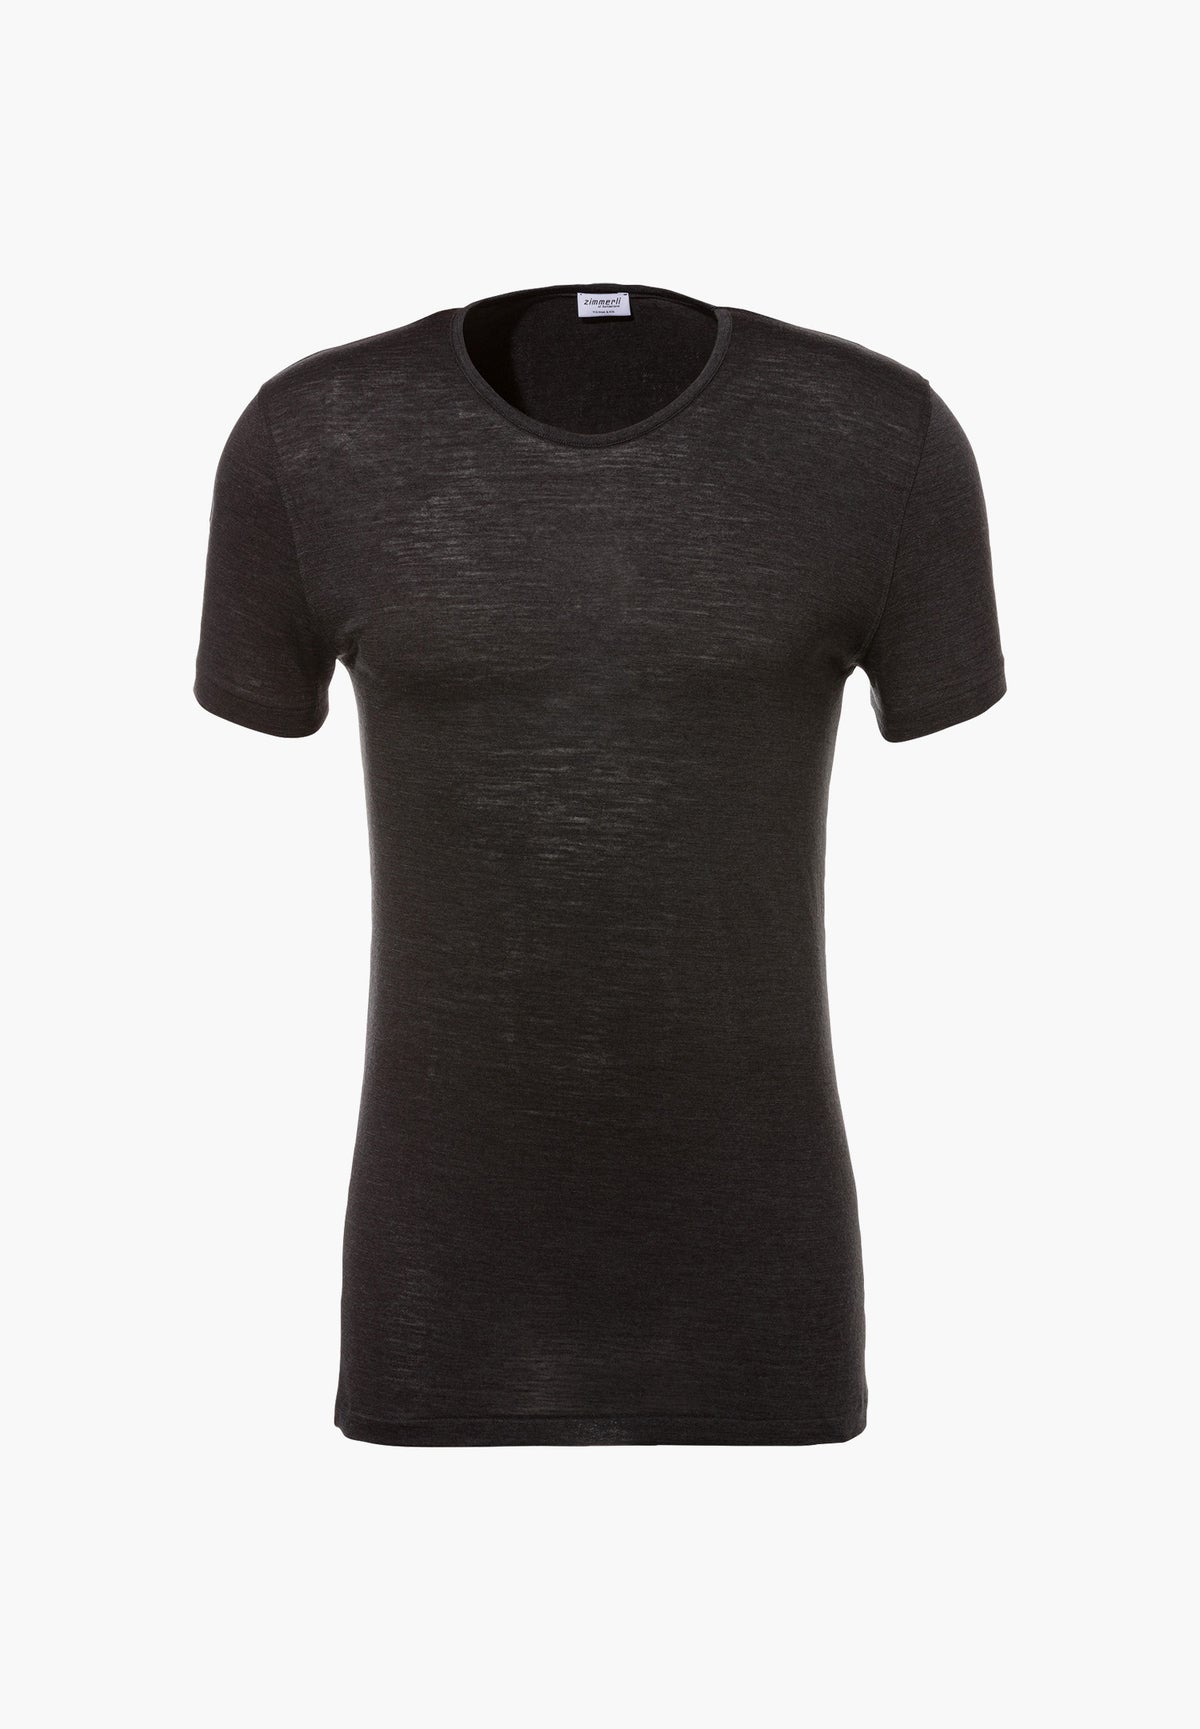 Wool &amp; Silk | T-Shirt à manches courtes - charcoal